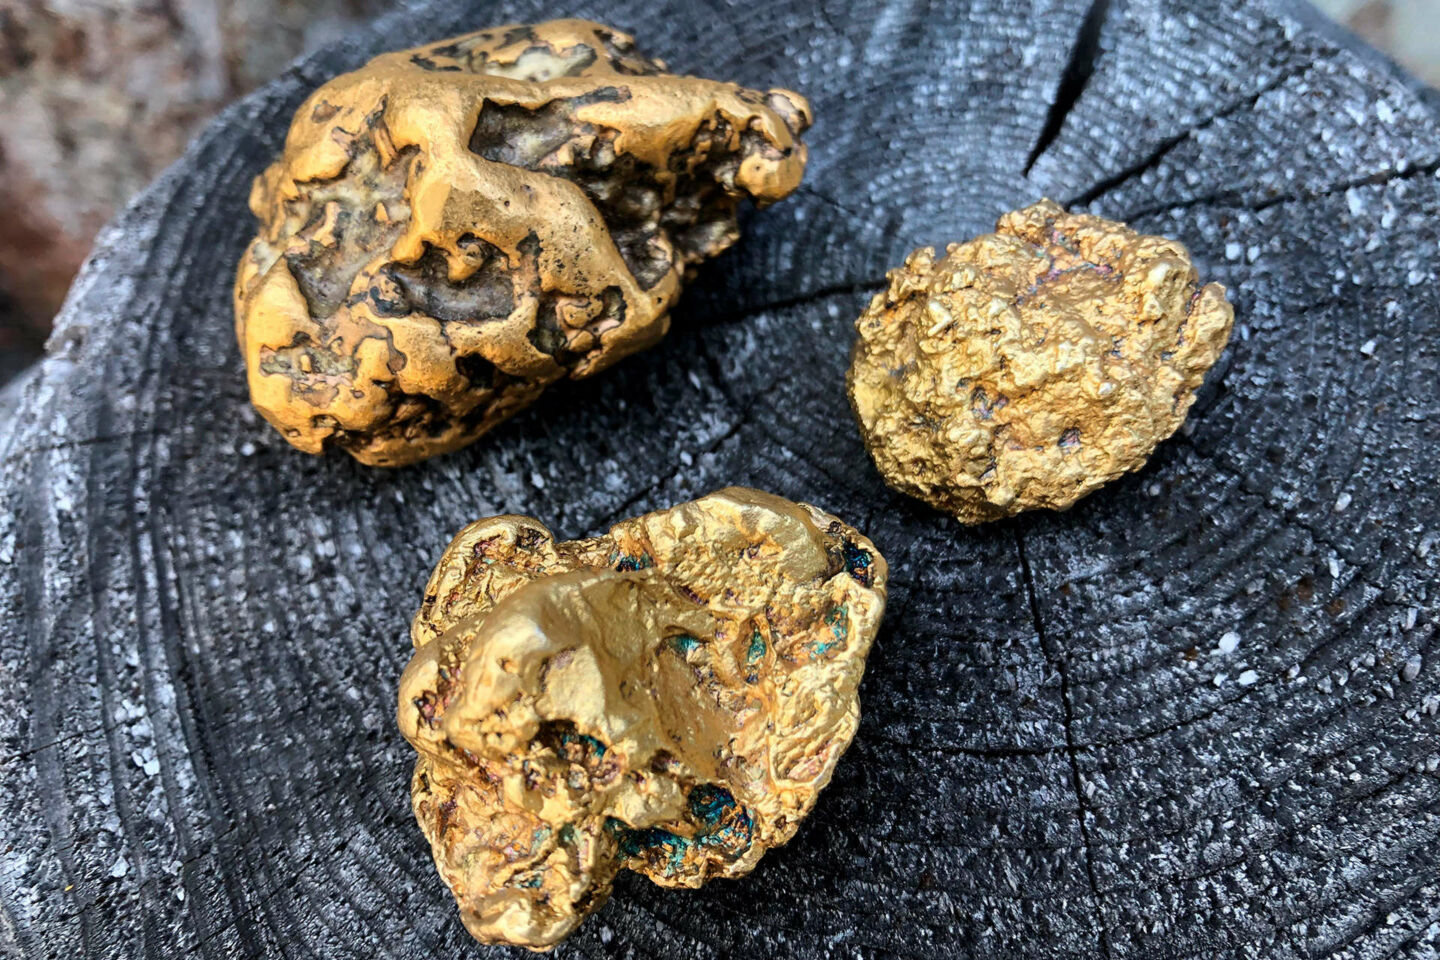 Gold nuggets found at Tankavaara Gold Village in Sodankylä, a Finnish Lapland filming location